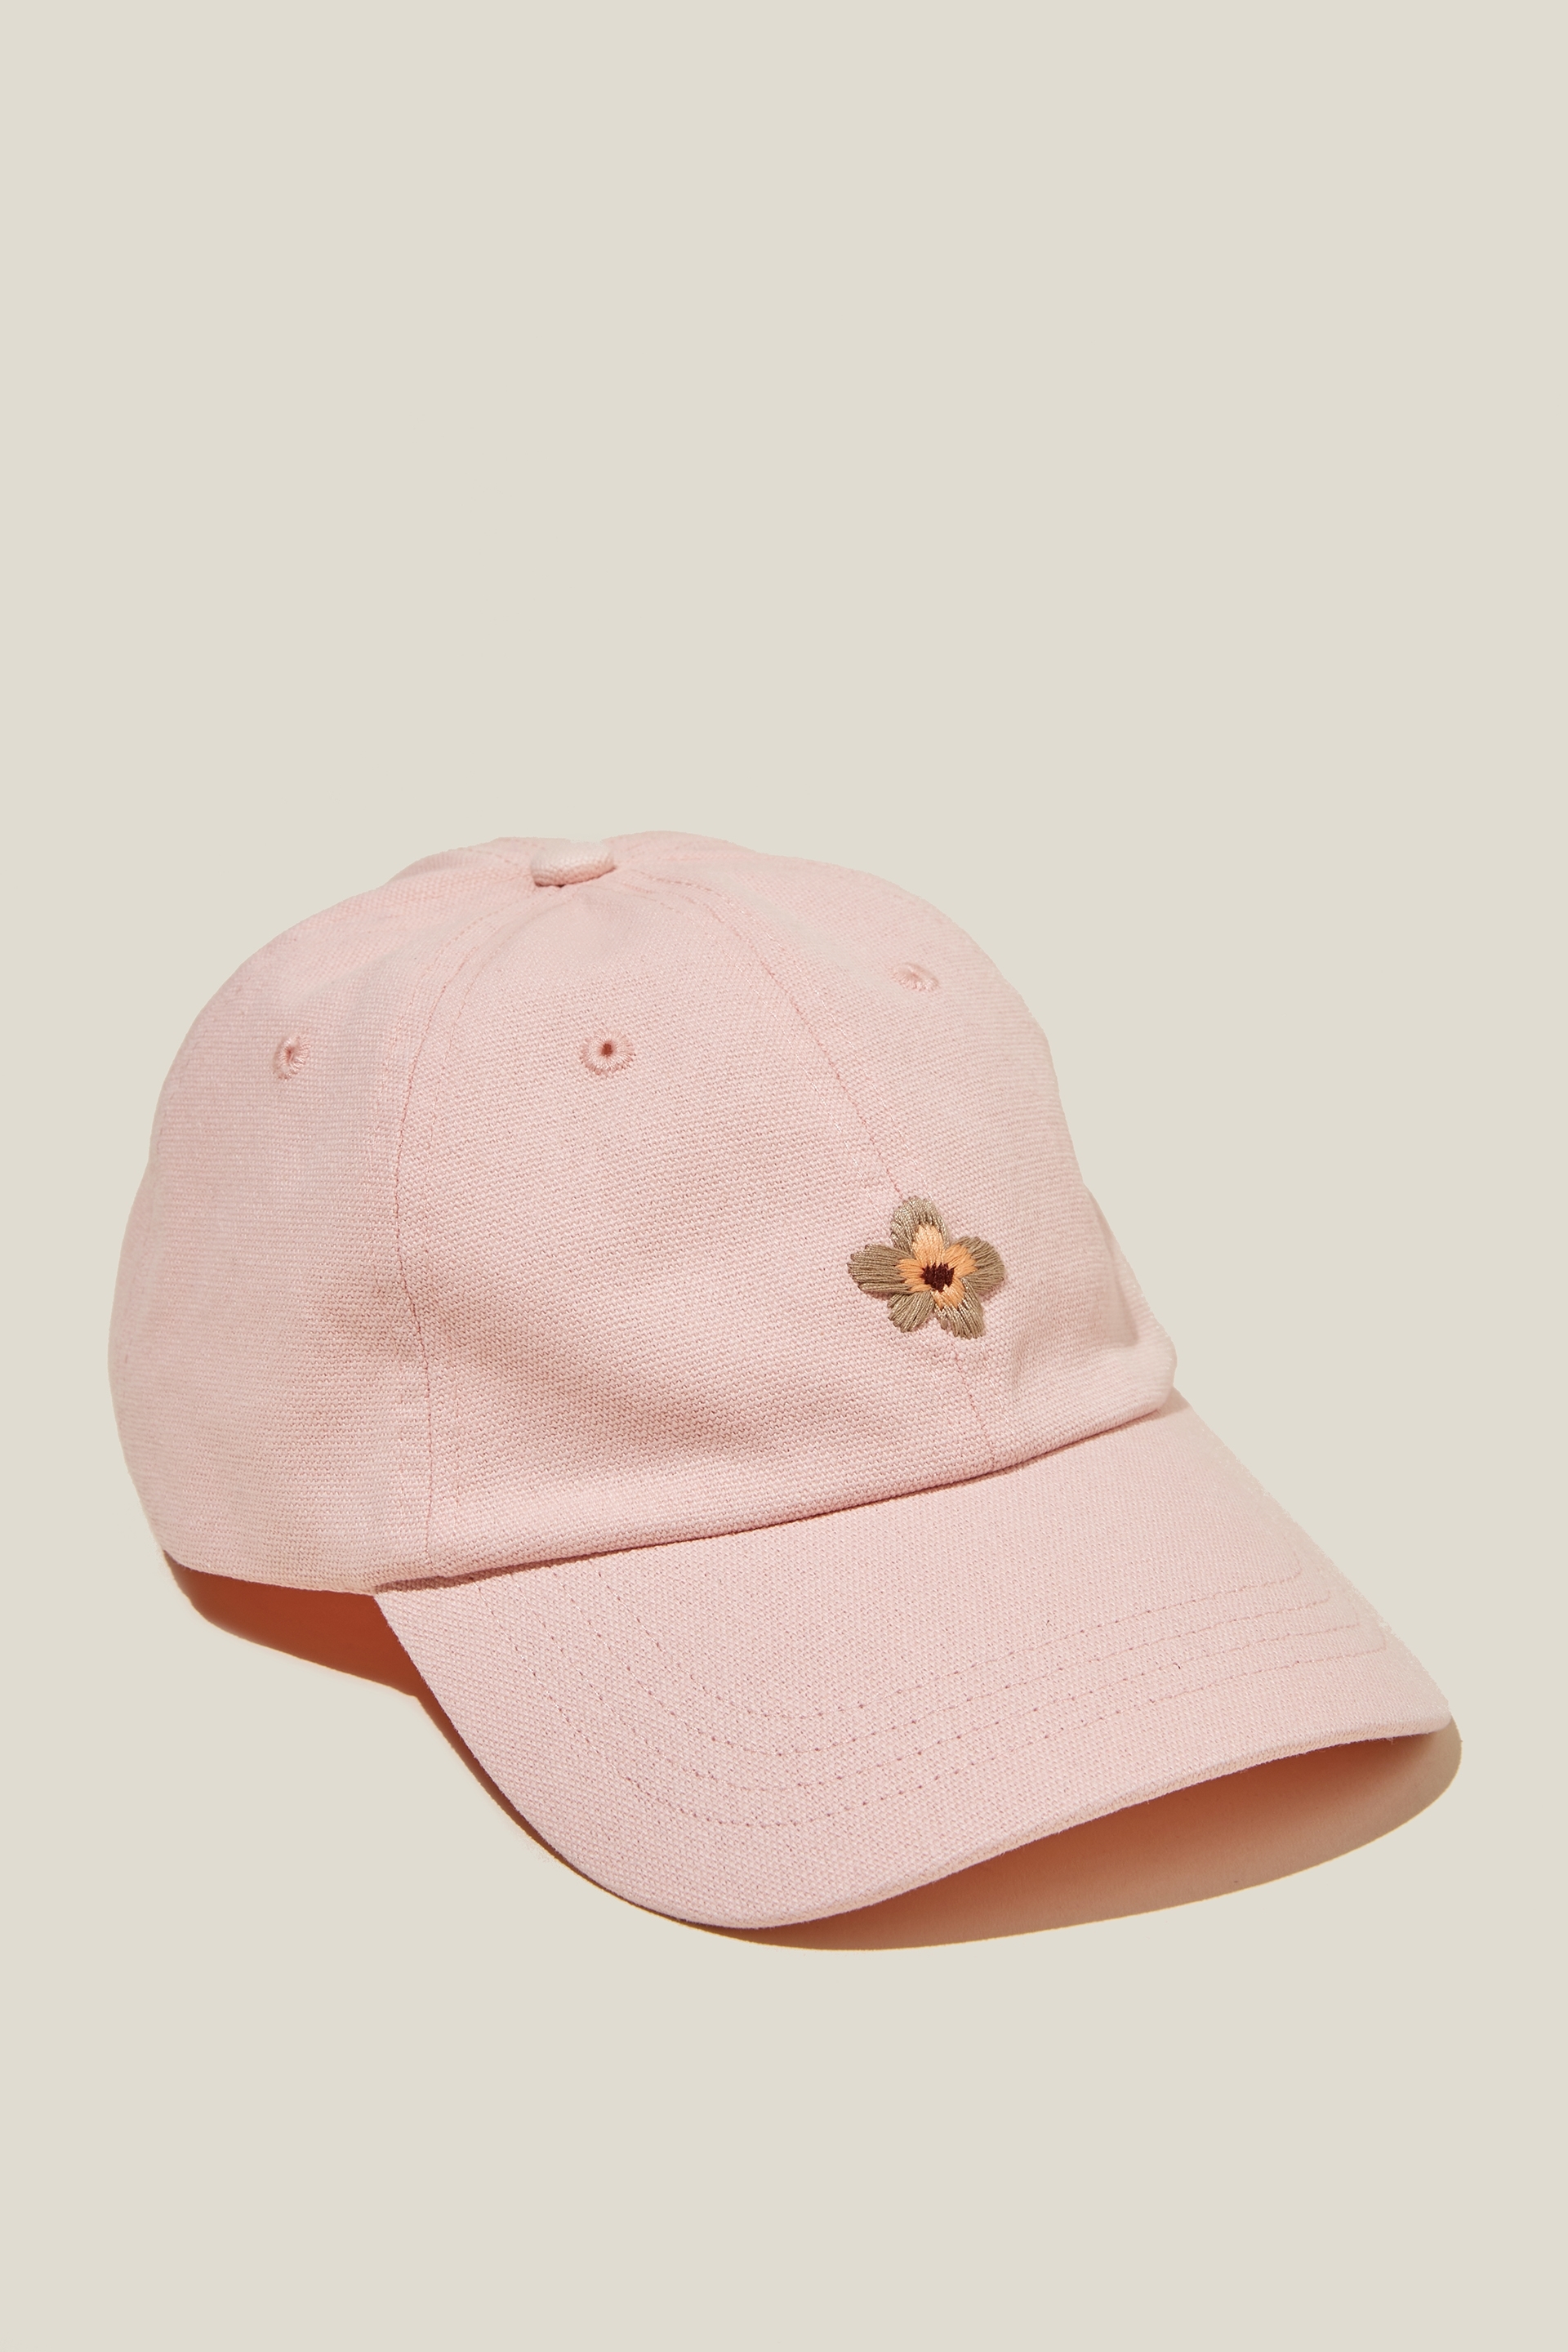 Rubi - Classic Dad Cap - Single flower motif/pink